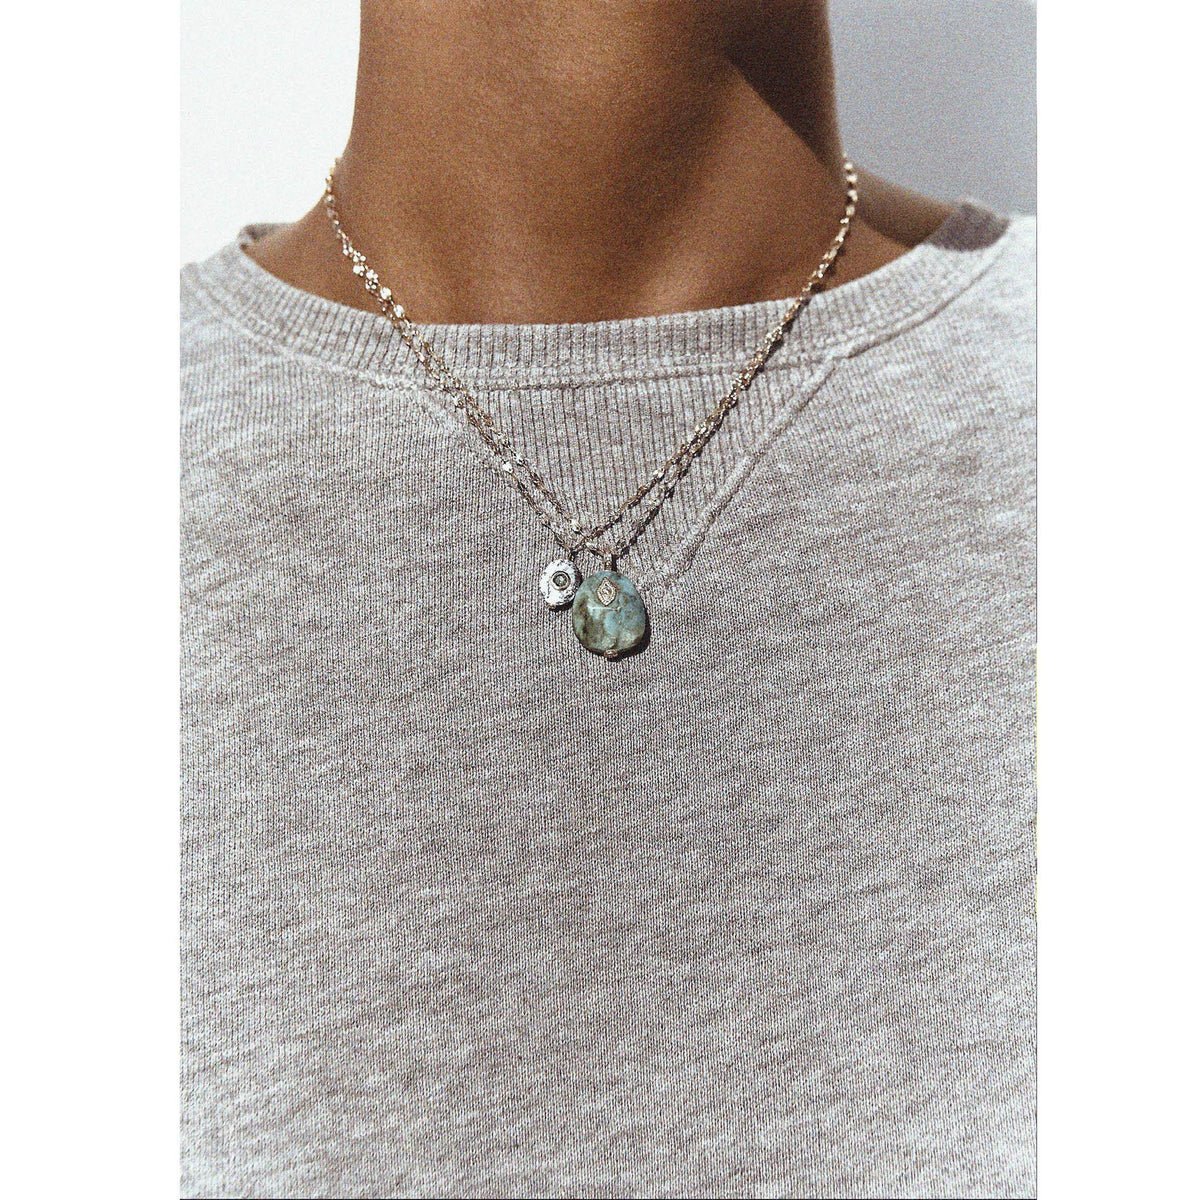 Arles necklace